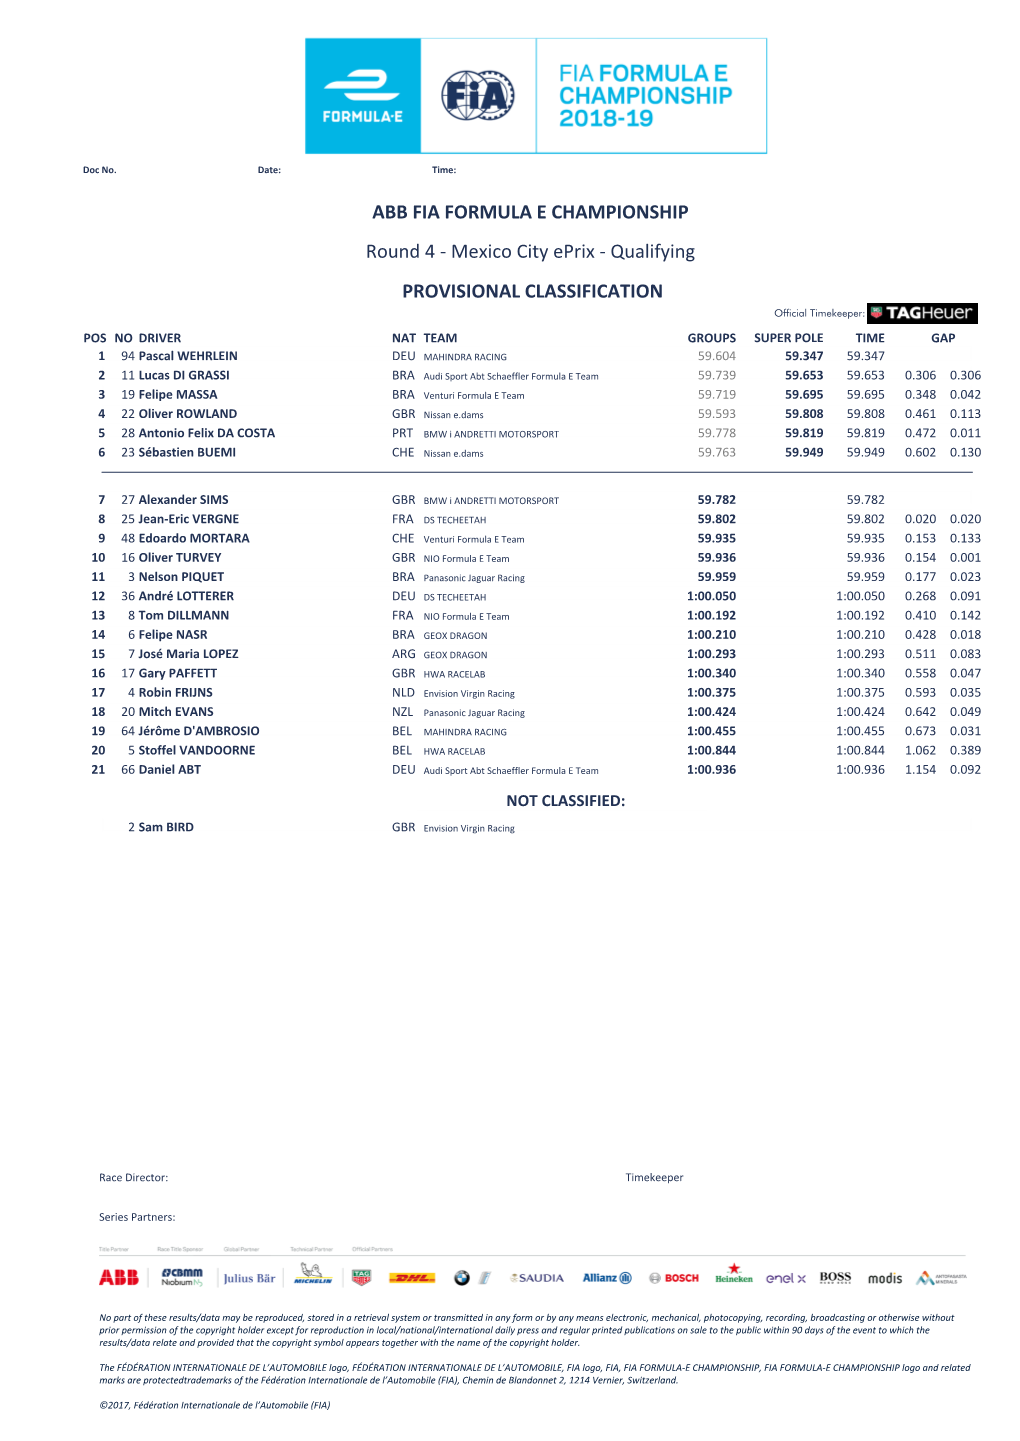 Qualifying ABB FIA FORMULA E CHAMPIONSHIP